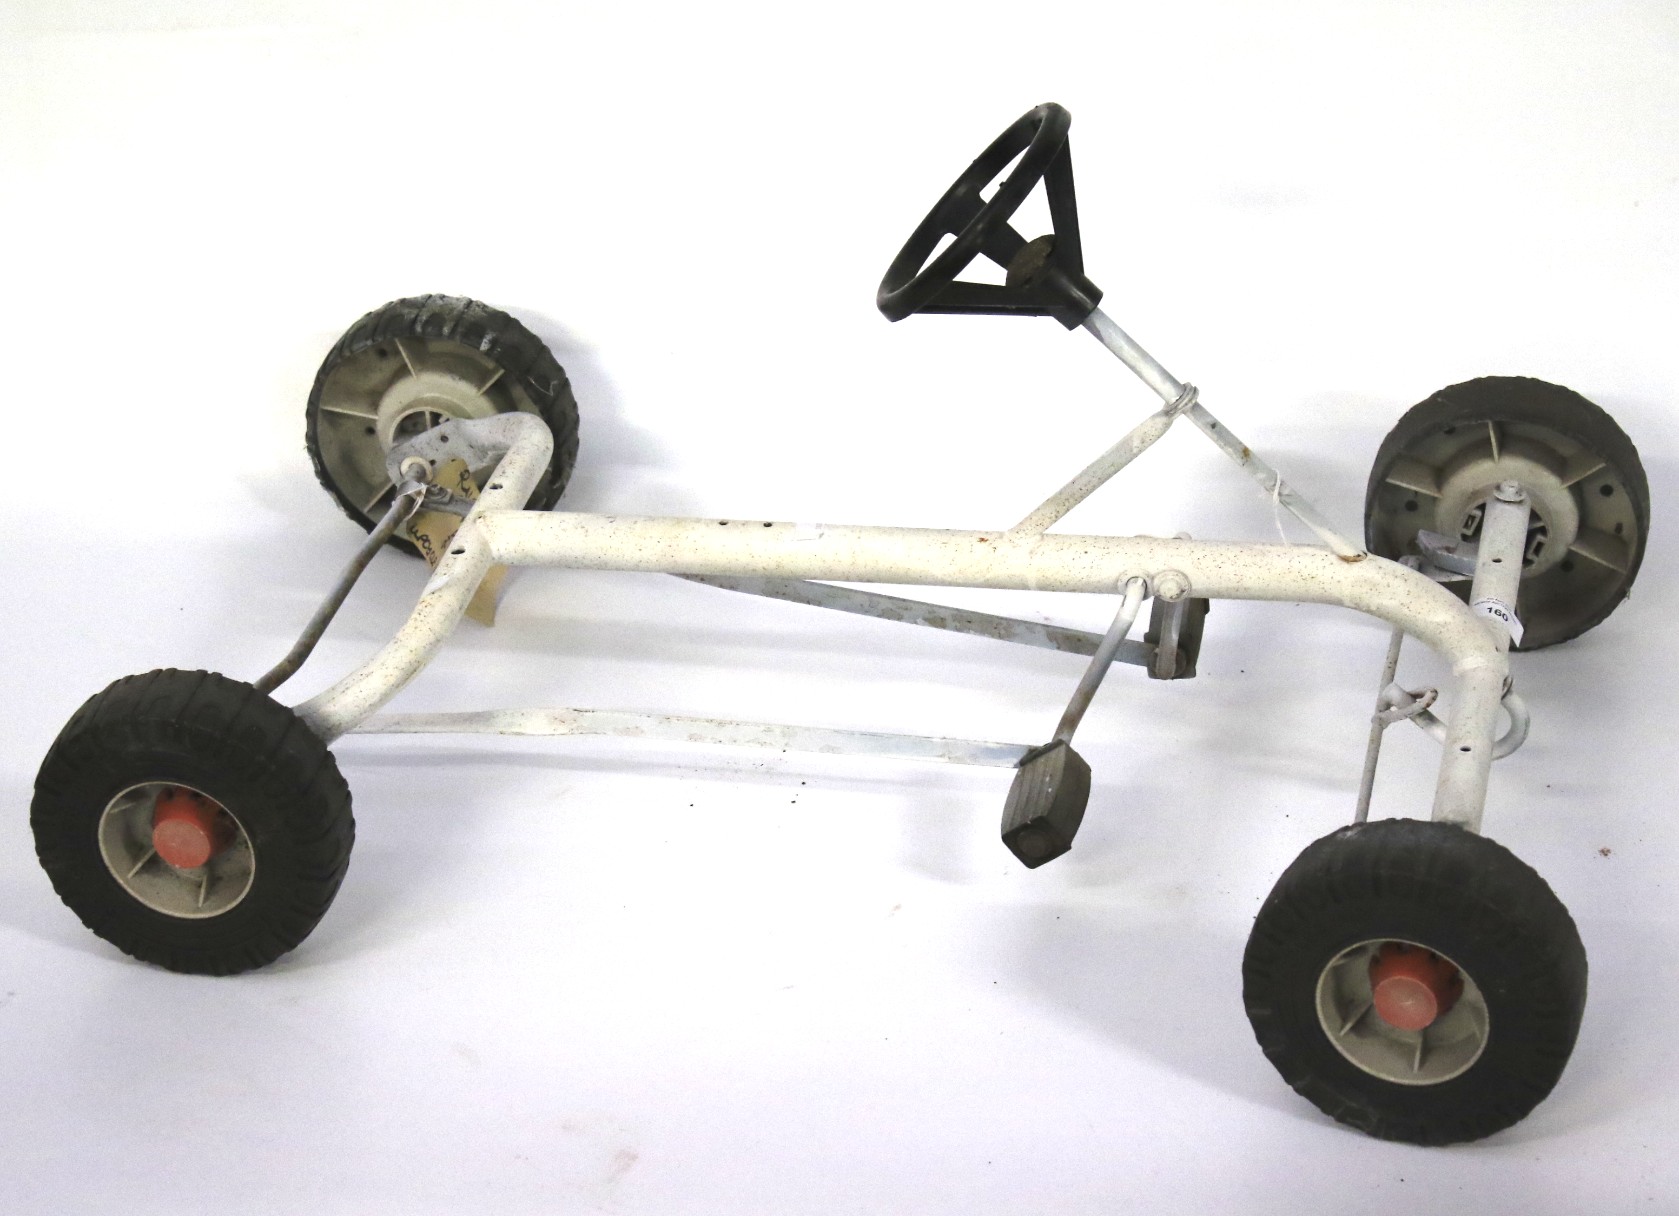 A vintage toy pedal go-cart frame.